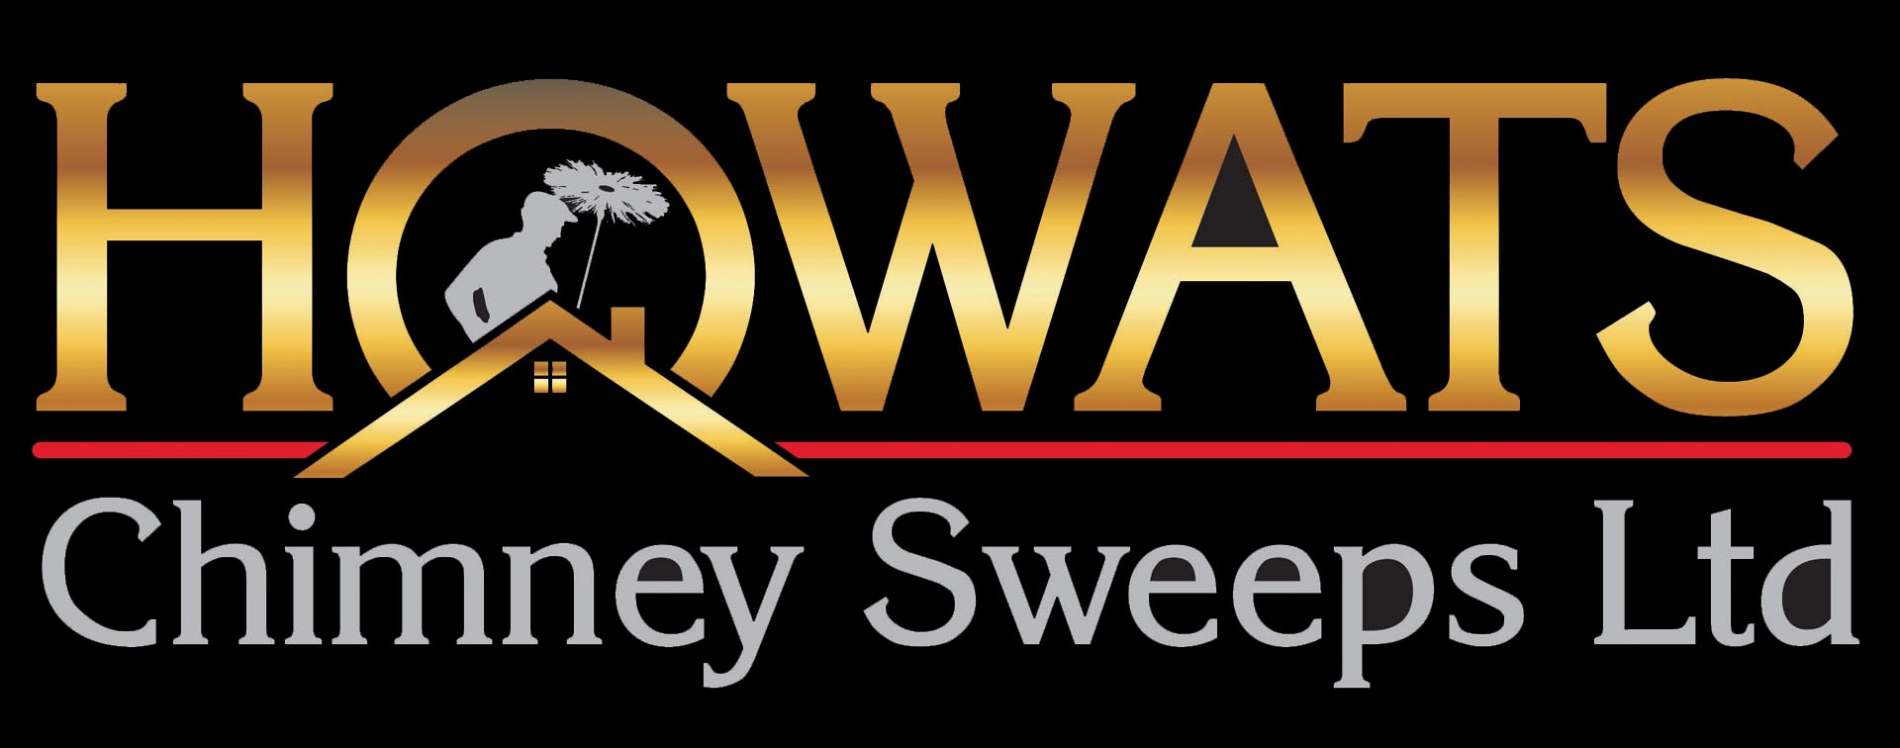 Chimney sweep | Howats Chimney Sweeps Ltd | Ruardean, Gloucestershire